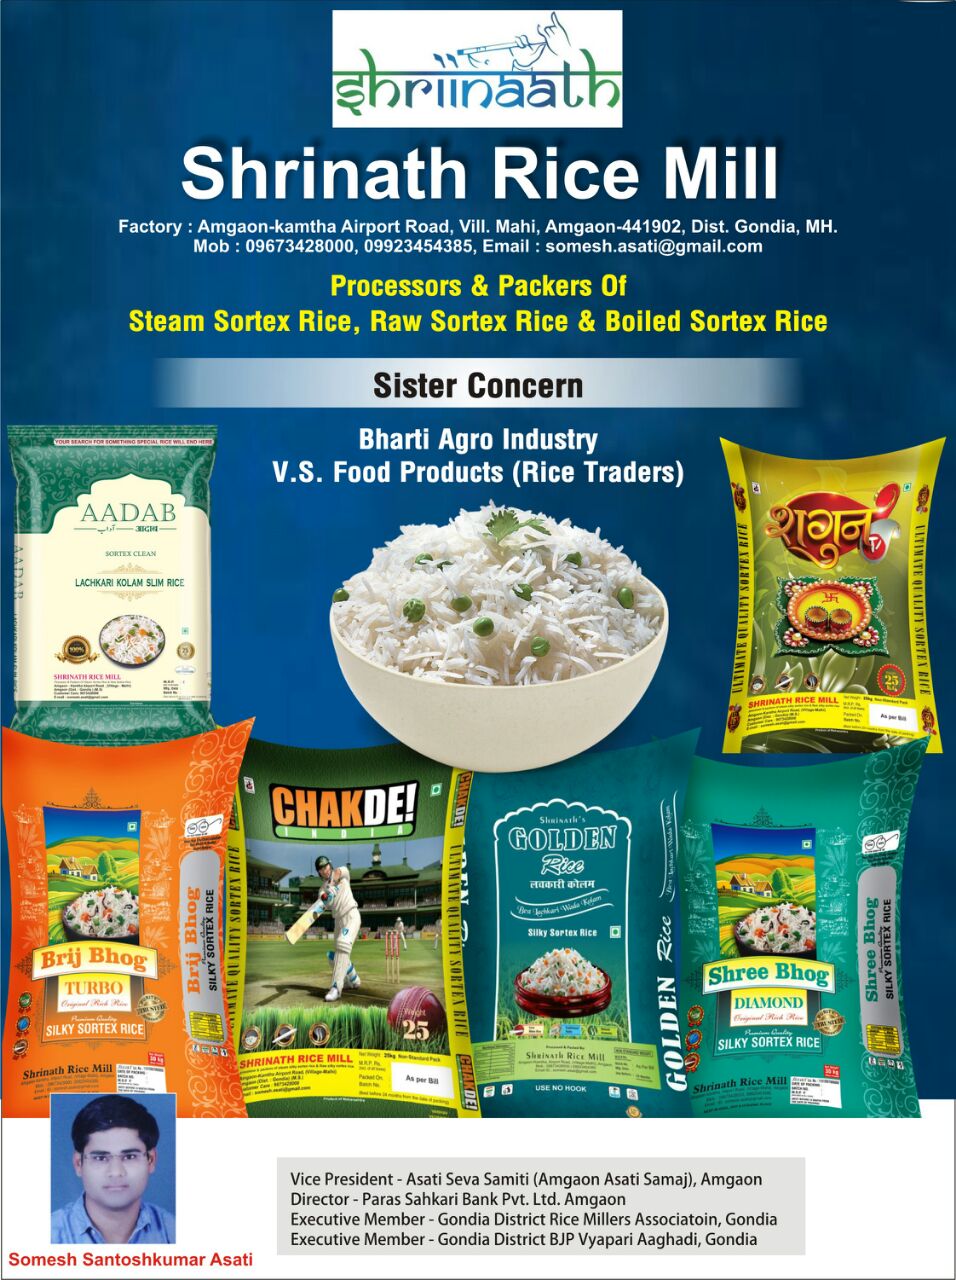 Shrinath Rice Mill